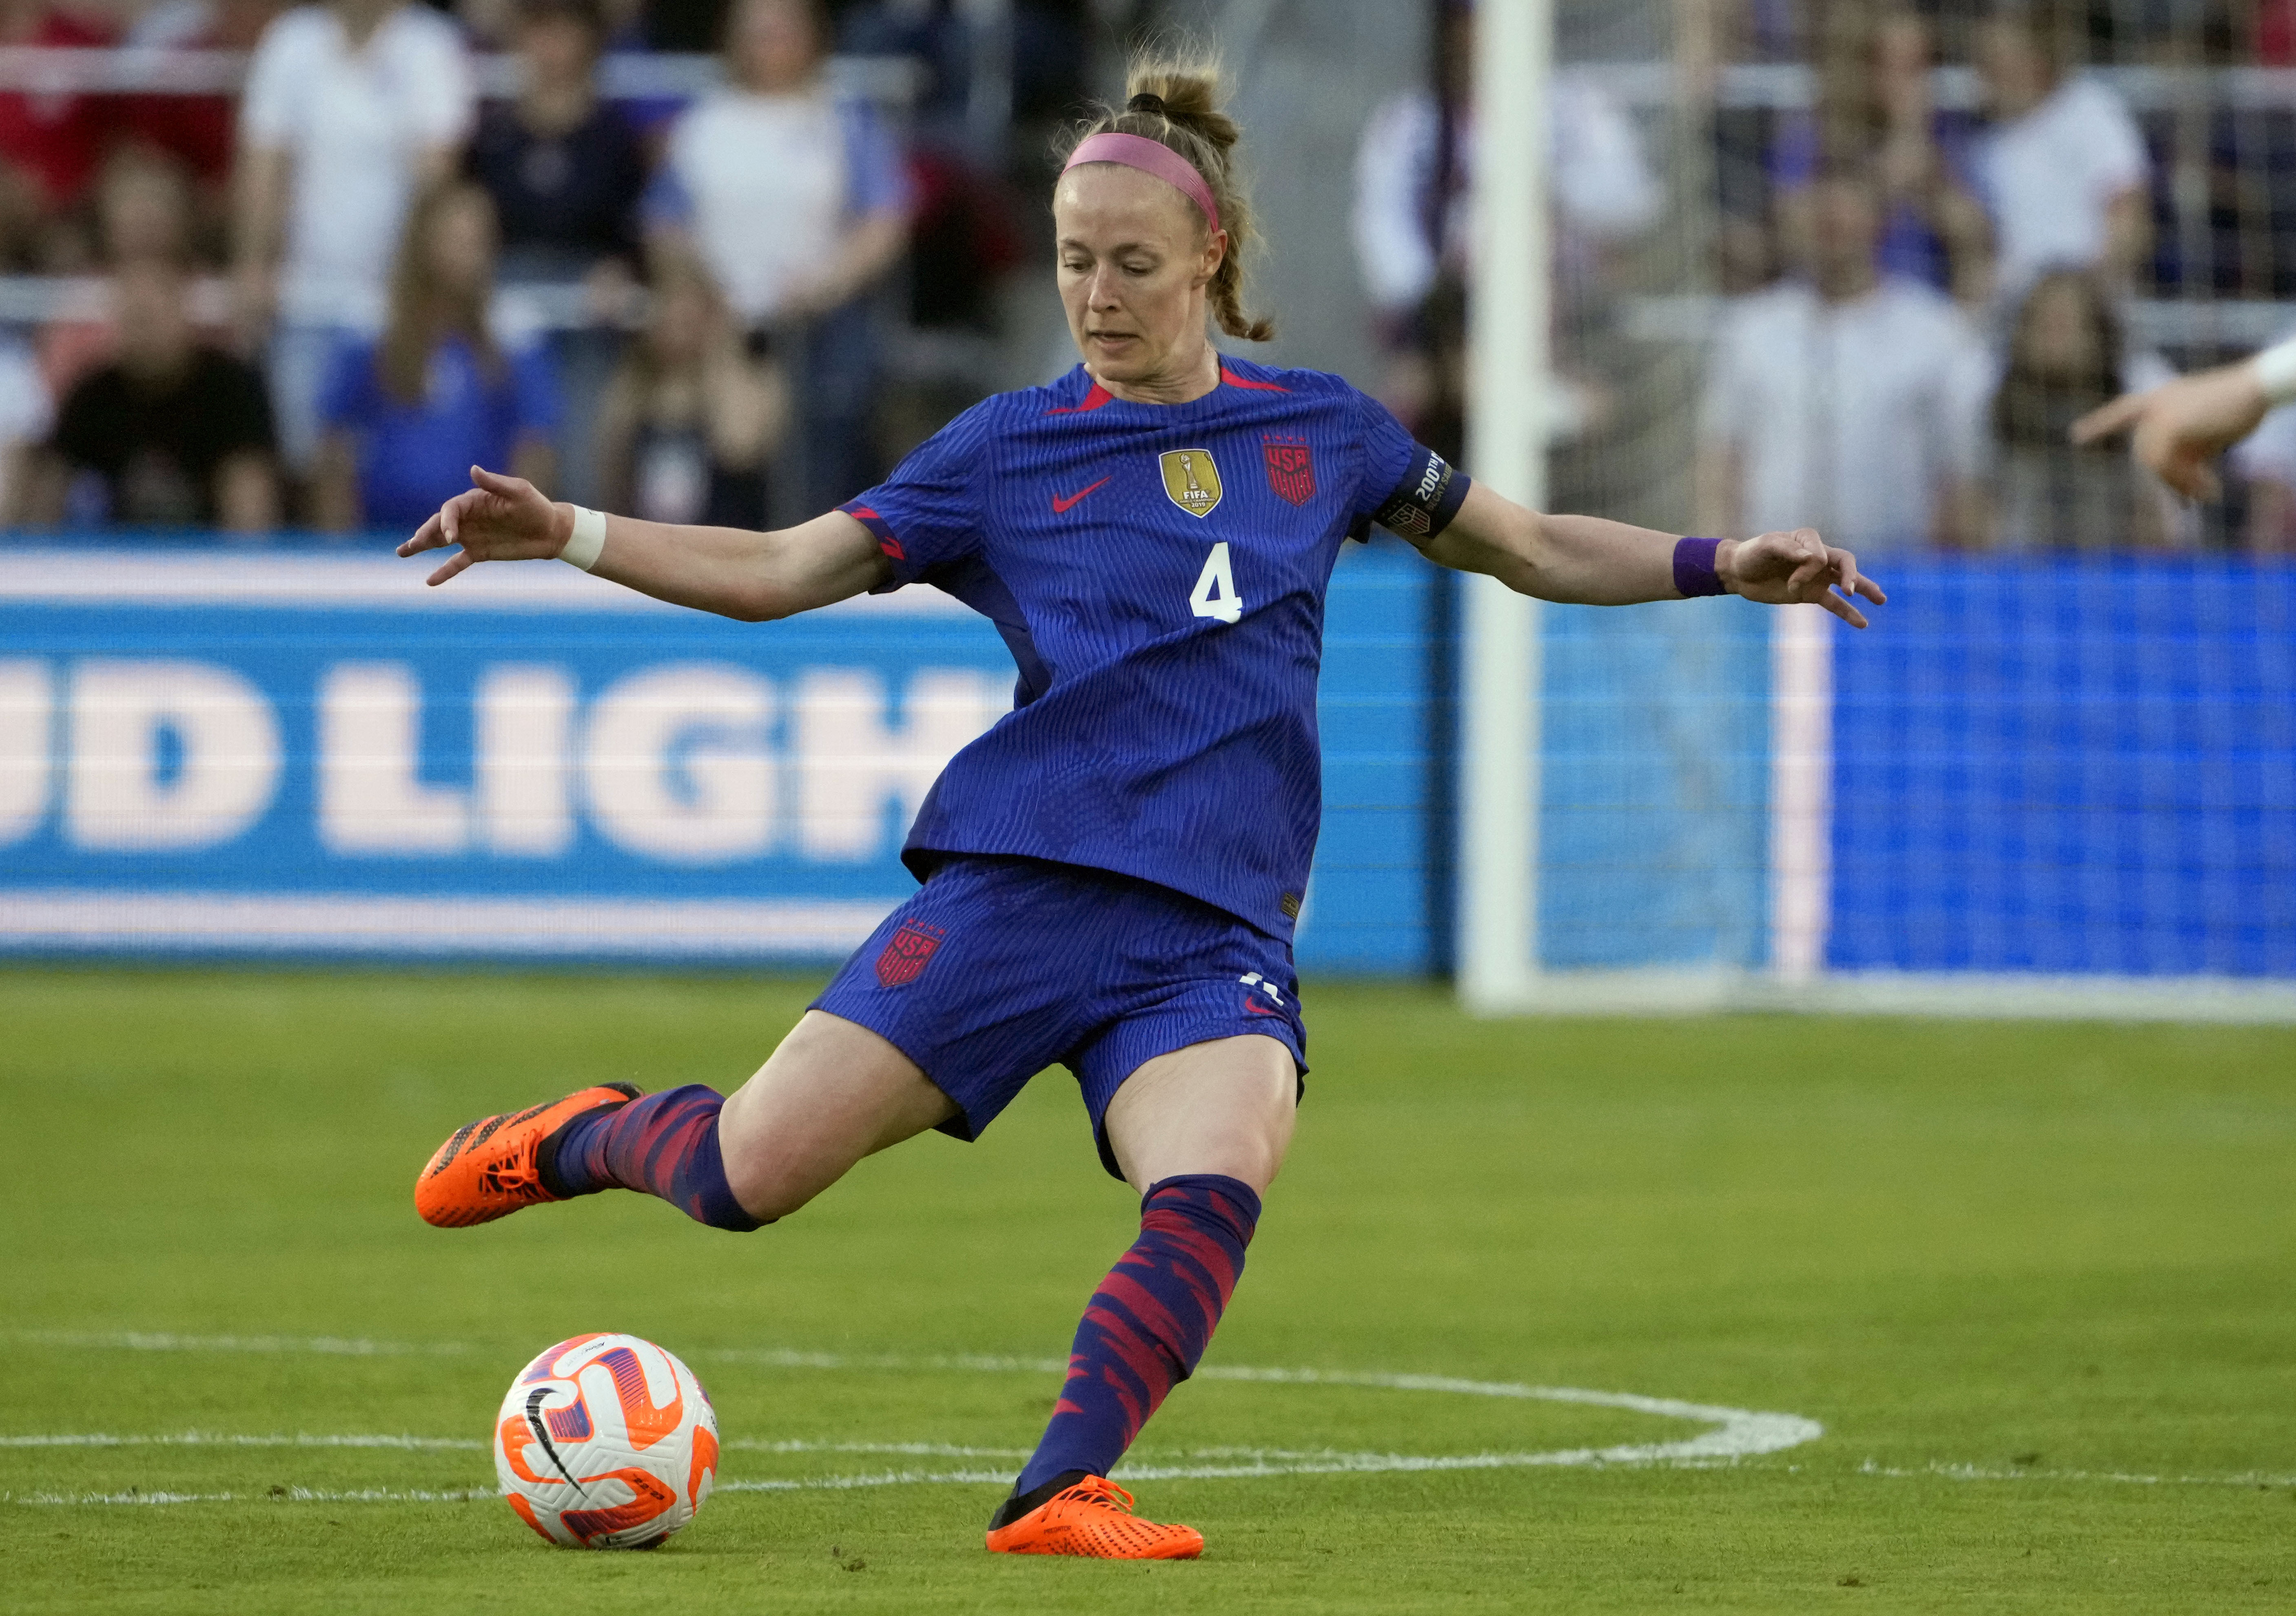 Swanson injures left knee in US match against Ireland